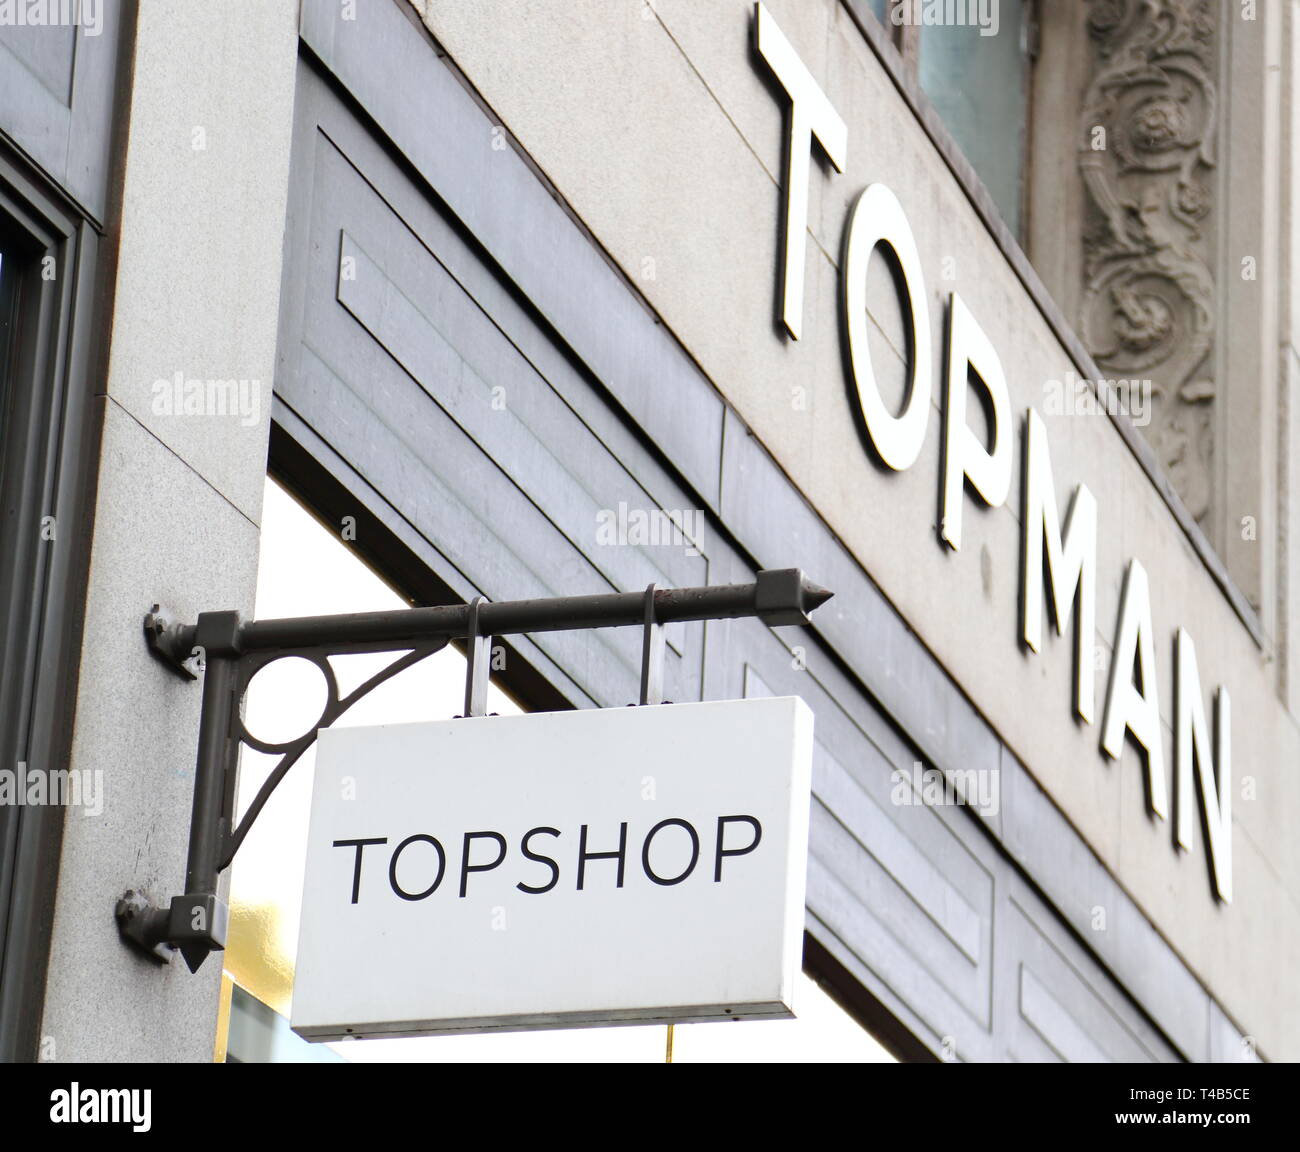 Topshop / Topman fashion store in Oxford Street, London, UK Stock Photo -  Alamy